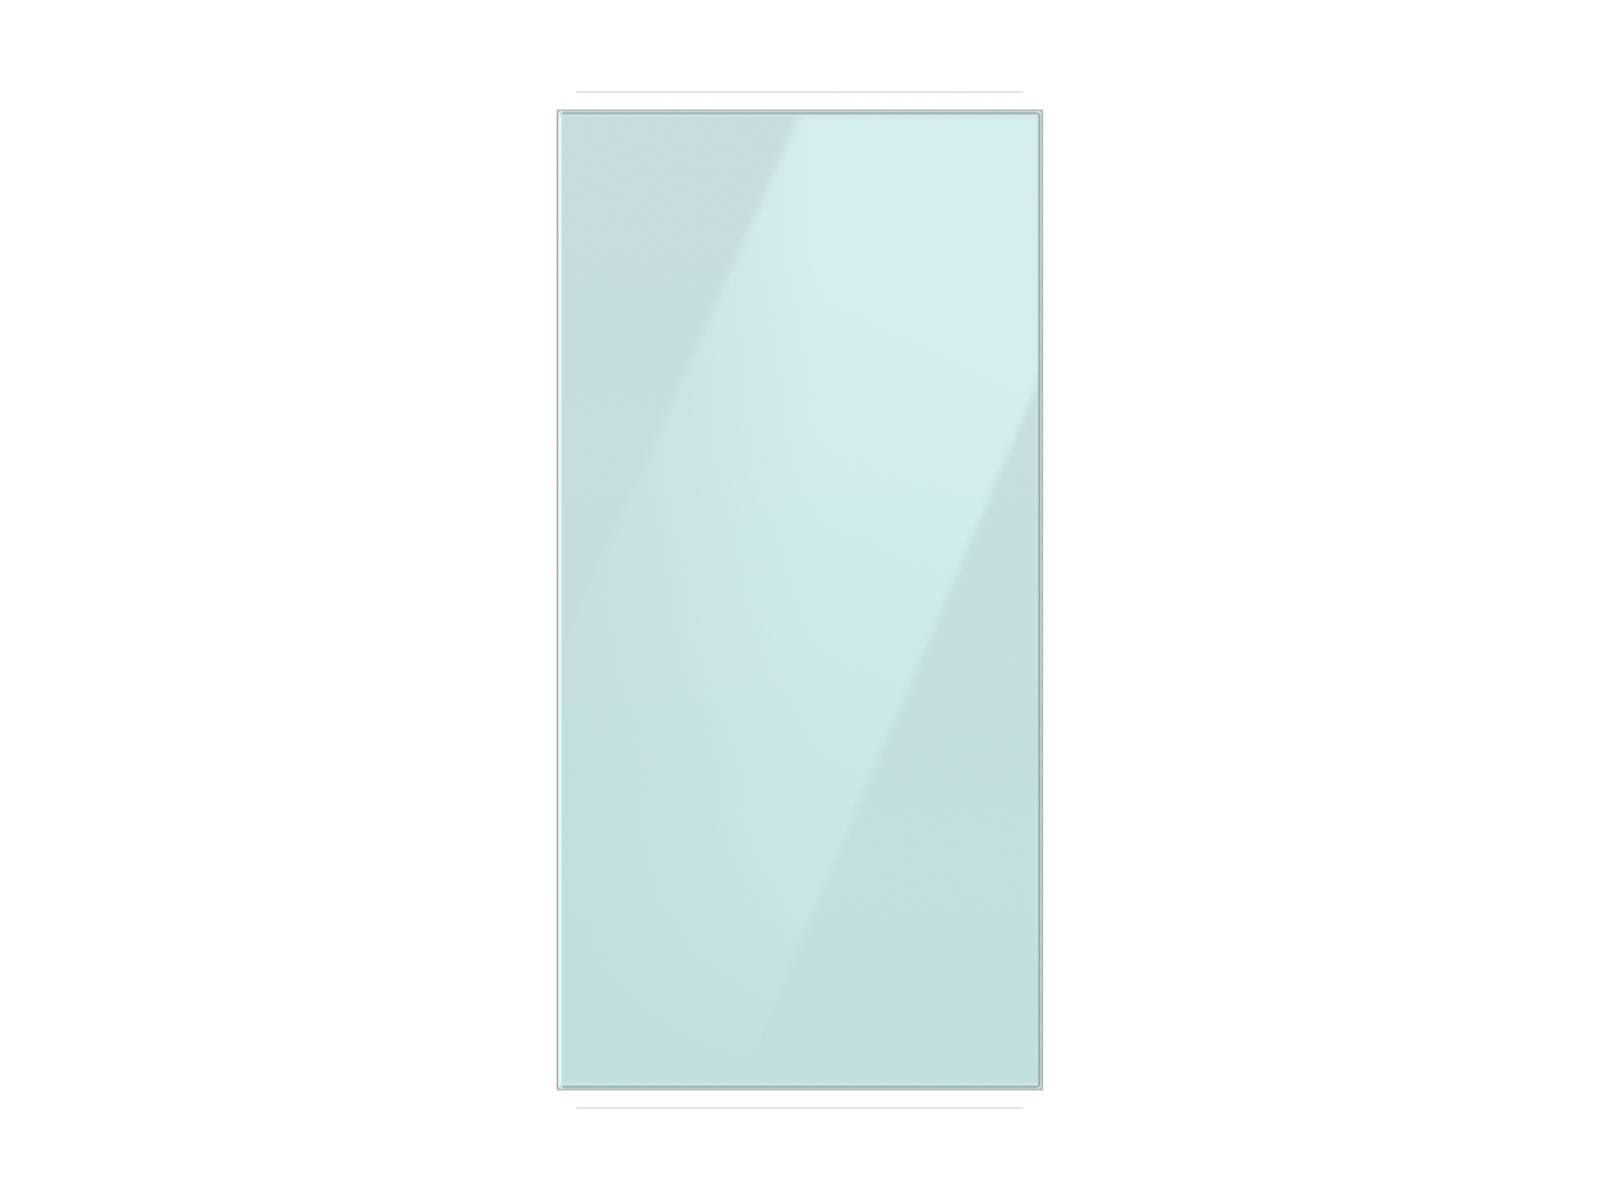 Thumbnail image of Bespoke 4-Door French Door Refrigerator Panel in Morning Blue Glass - Top Panel